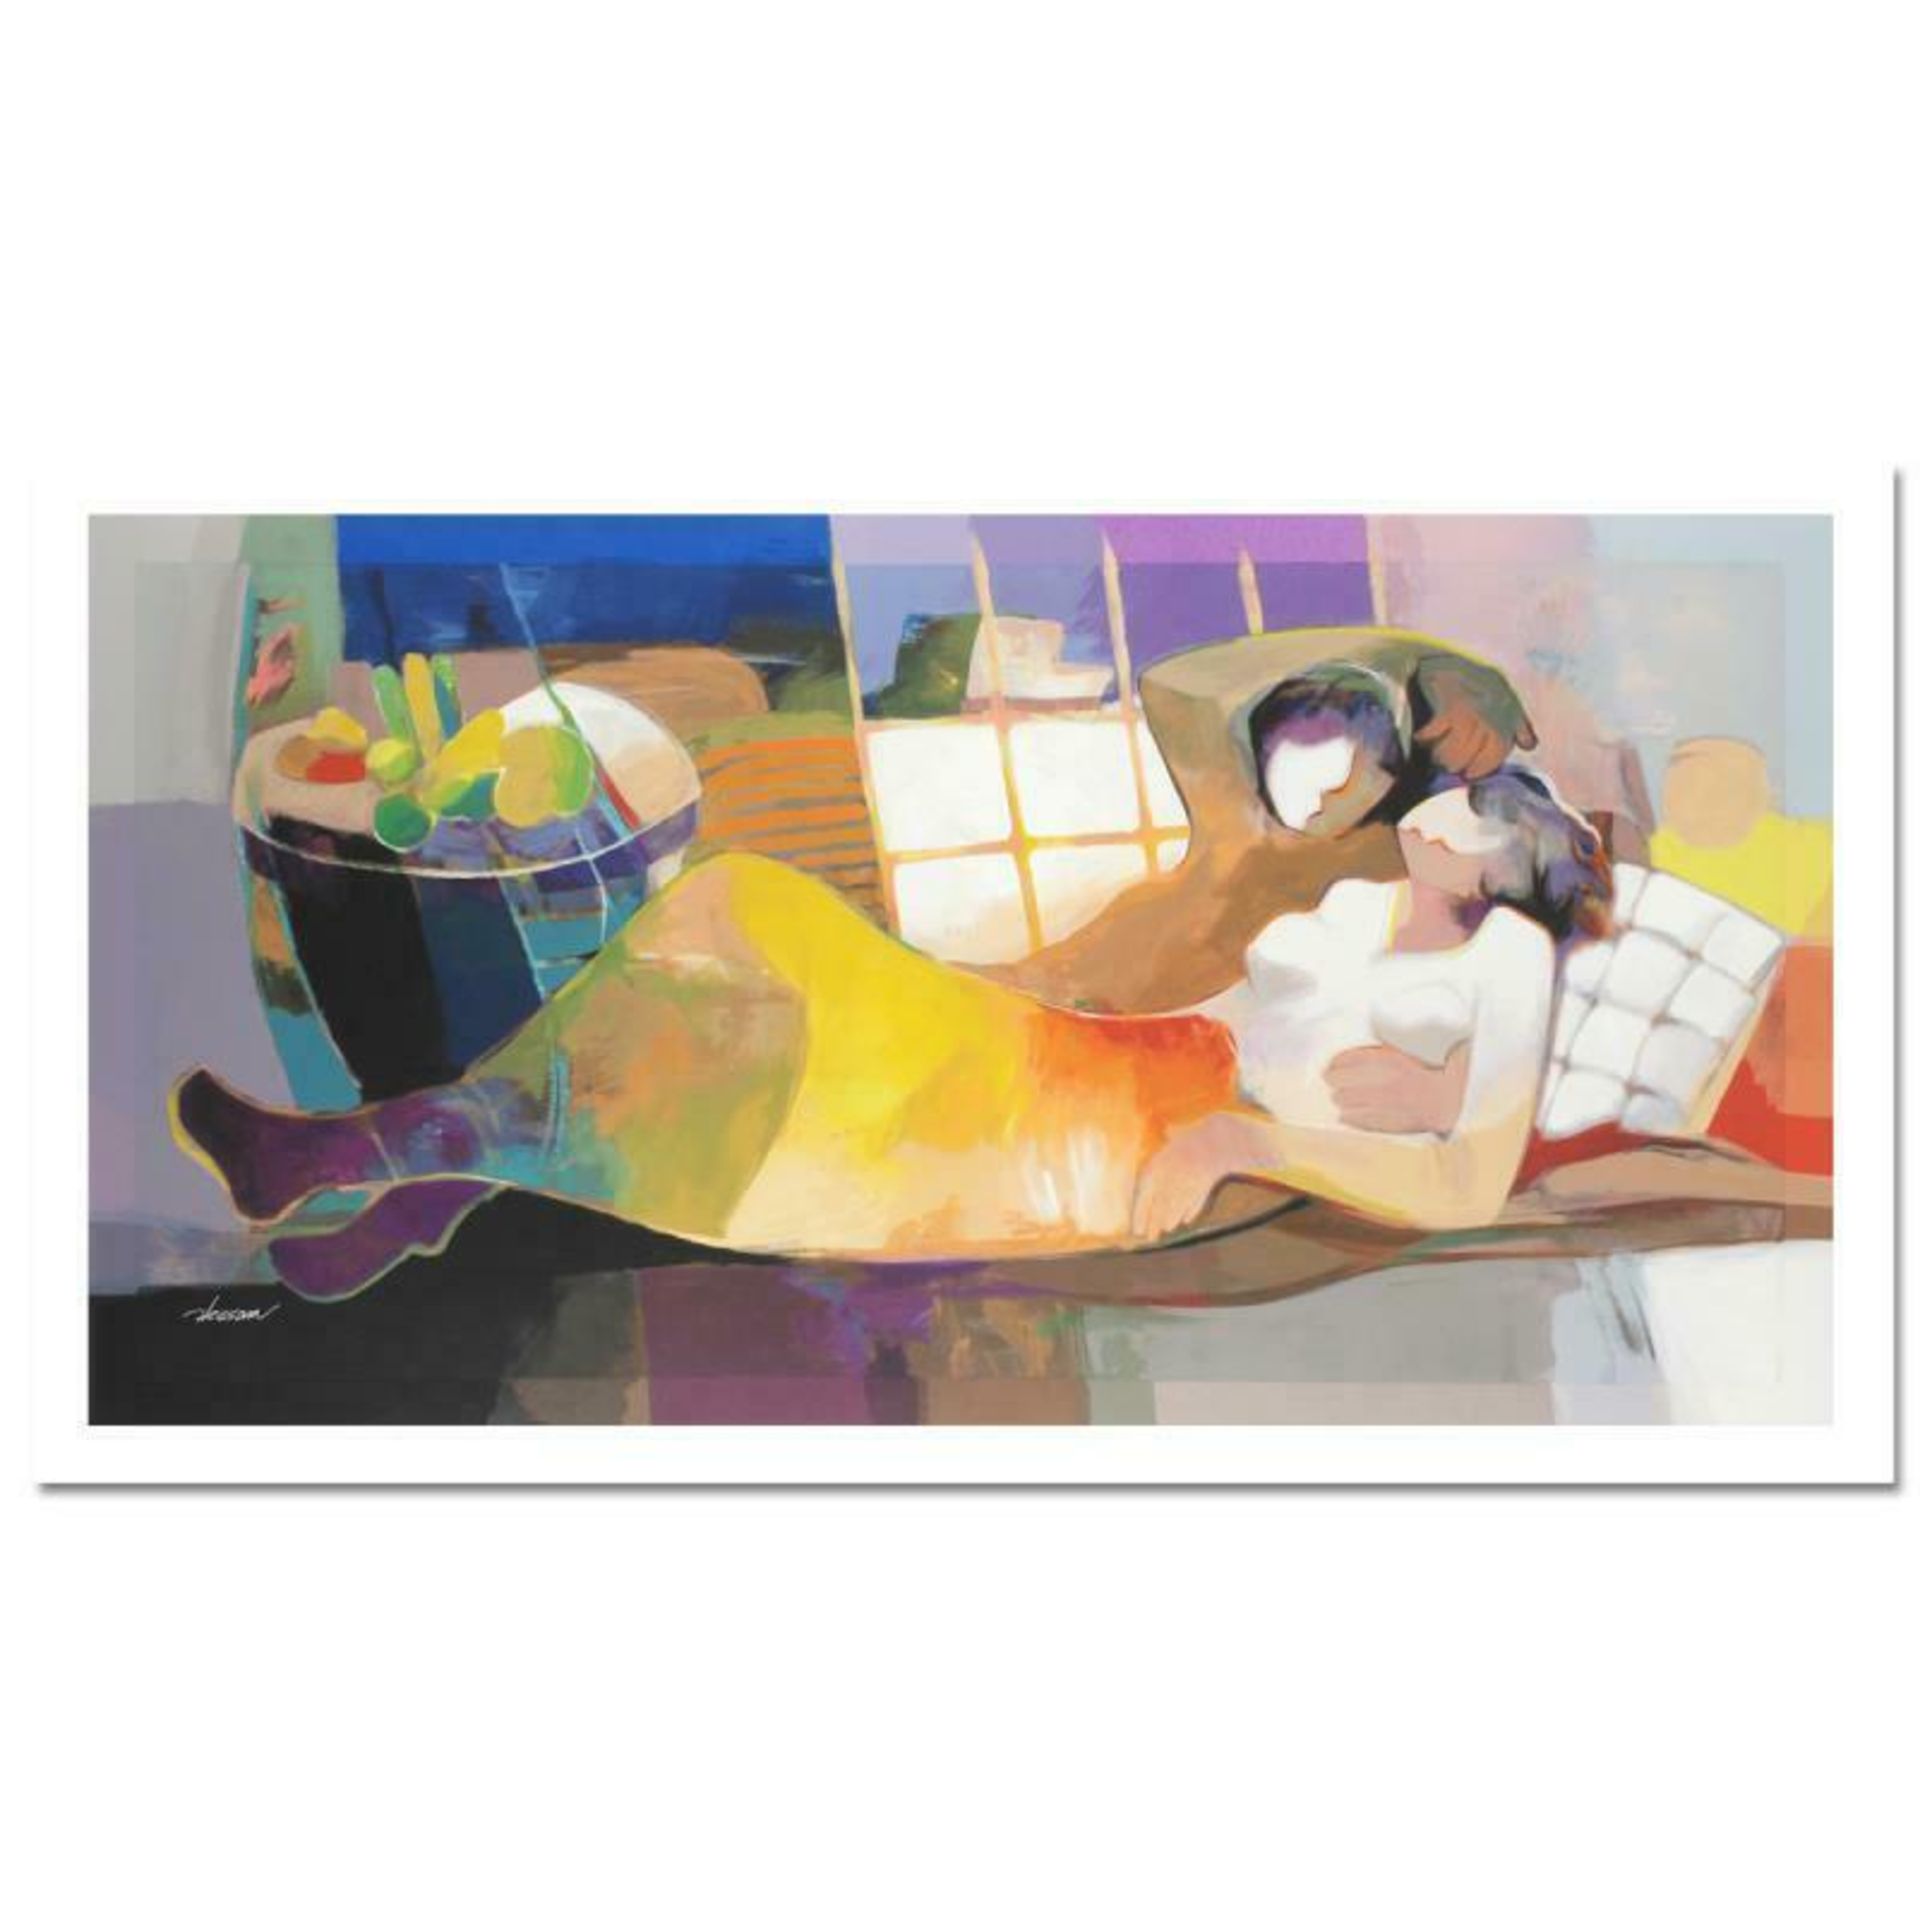 Hessam Abrishami "Daylight Dream" Limited Edition Serigraph on Canvas (48" x 24"